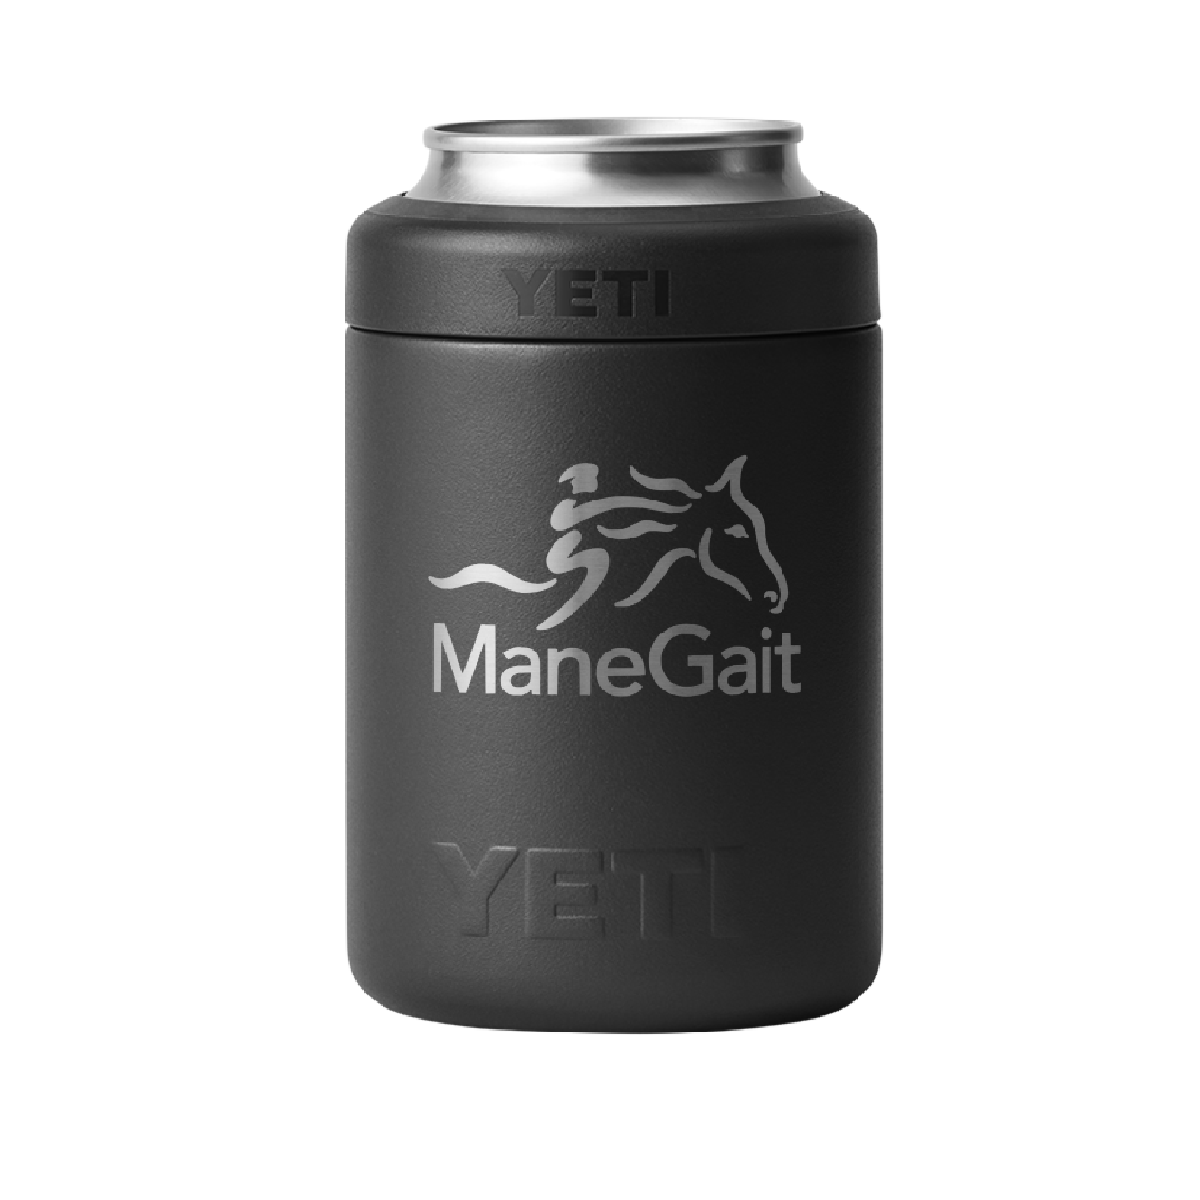 Yeti Rambler Colster Can Cooler 2.0 — ManeGait Therapeutic